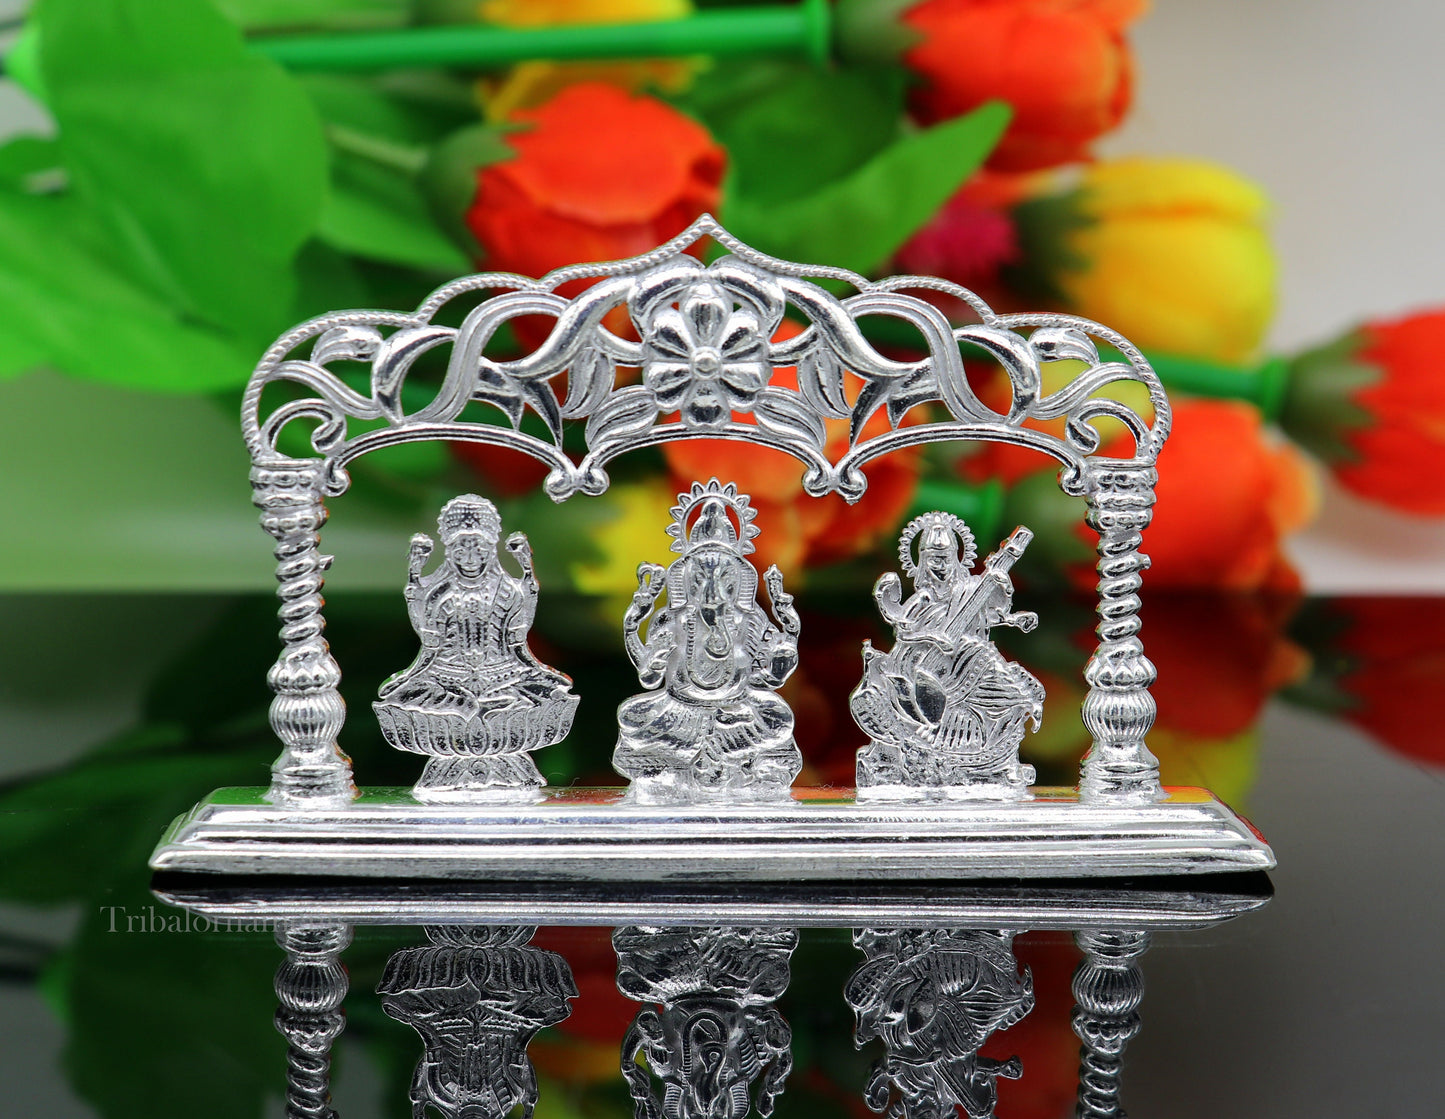 Solid Sterling silver handmade Hindu idols Laxmi,Ganesha and Saraswati statue, puja article figurine, home décor Diwali puja gift su532 - TRIBAL ORNAMENTS